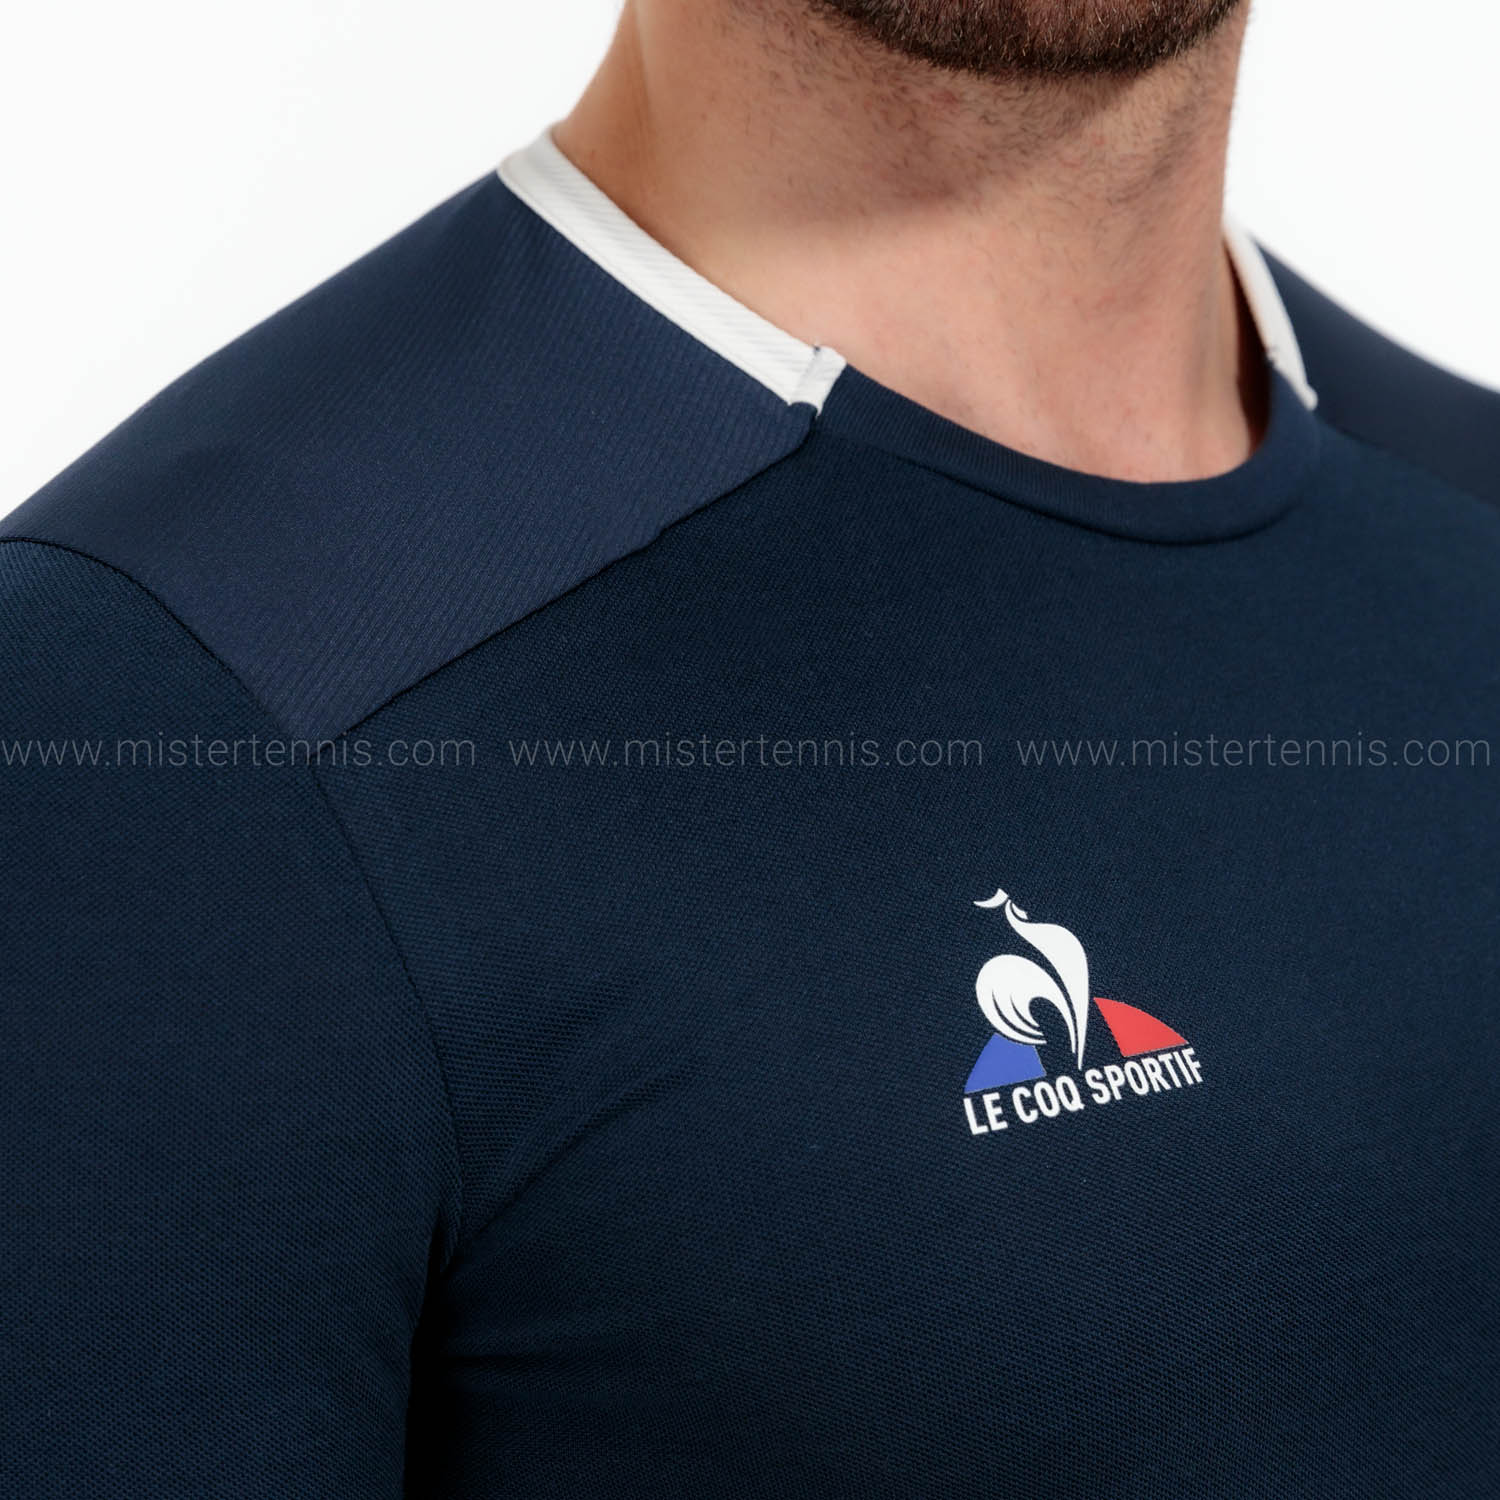 Le Coq Sportif Court Camiseta - Dress Blues/New Optical White